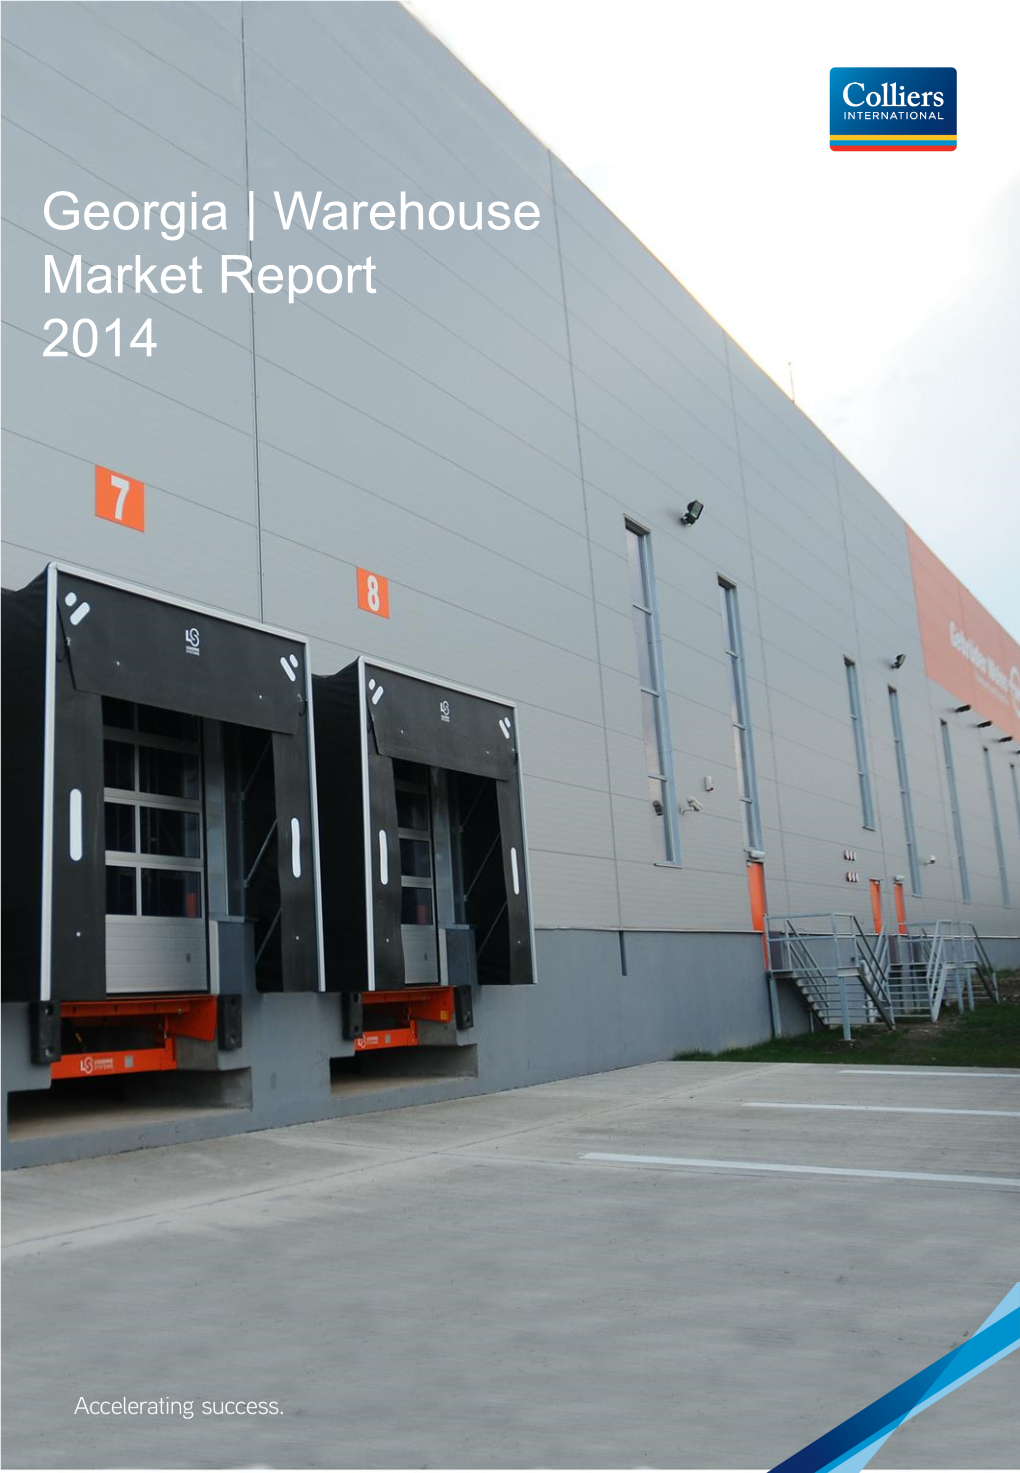 Georgia | Warehouse Market Report 2014 Contents